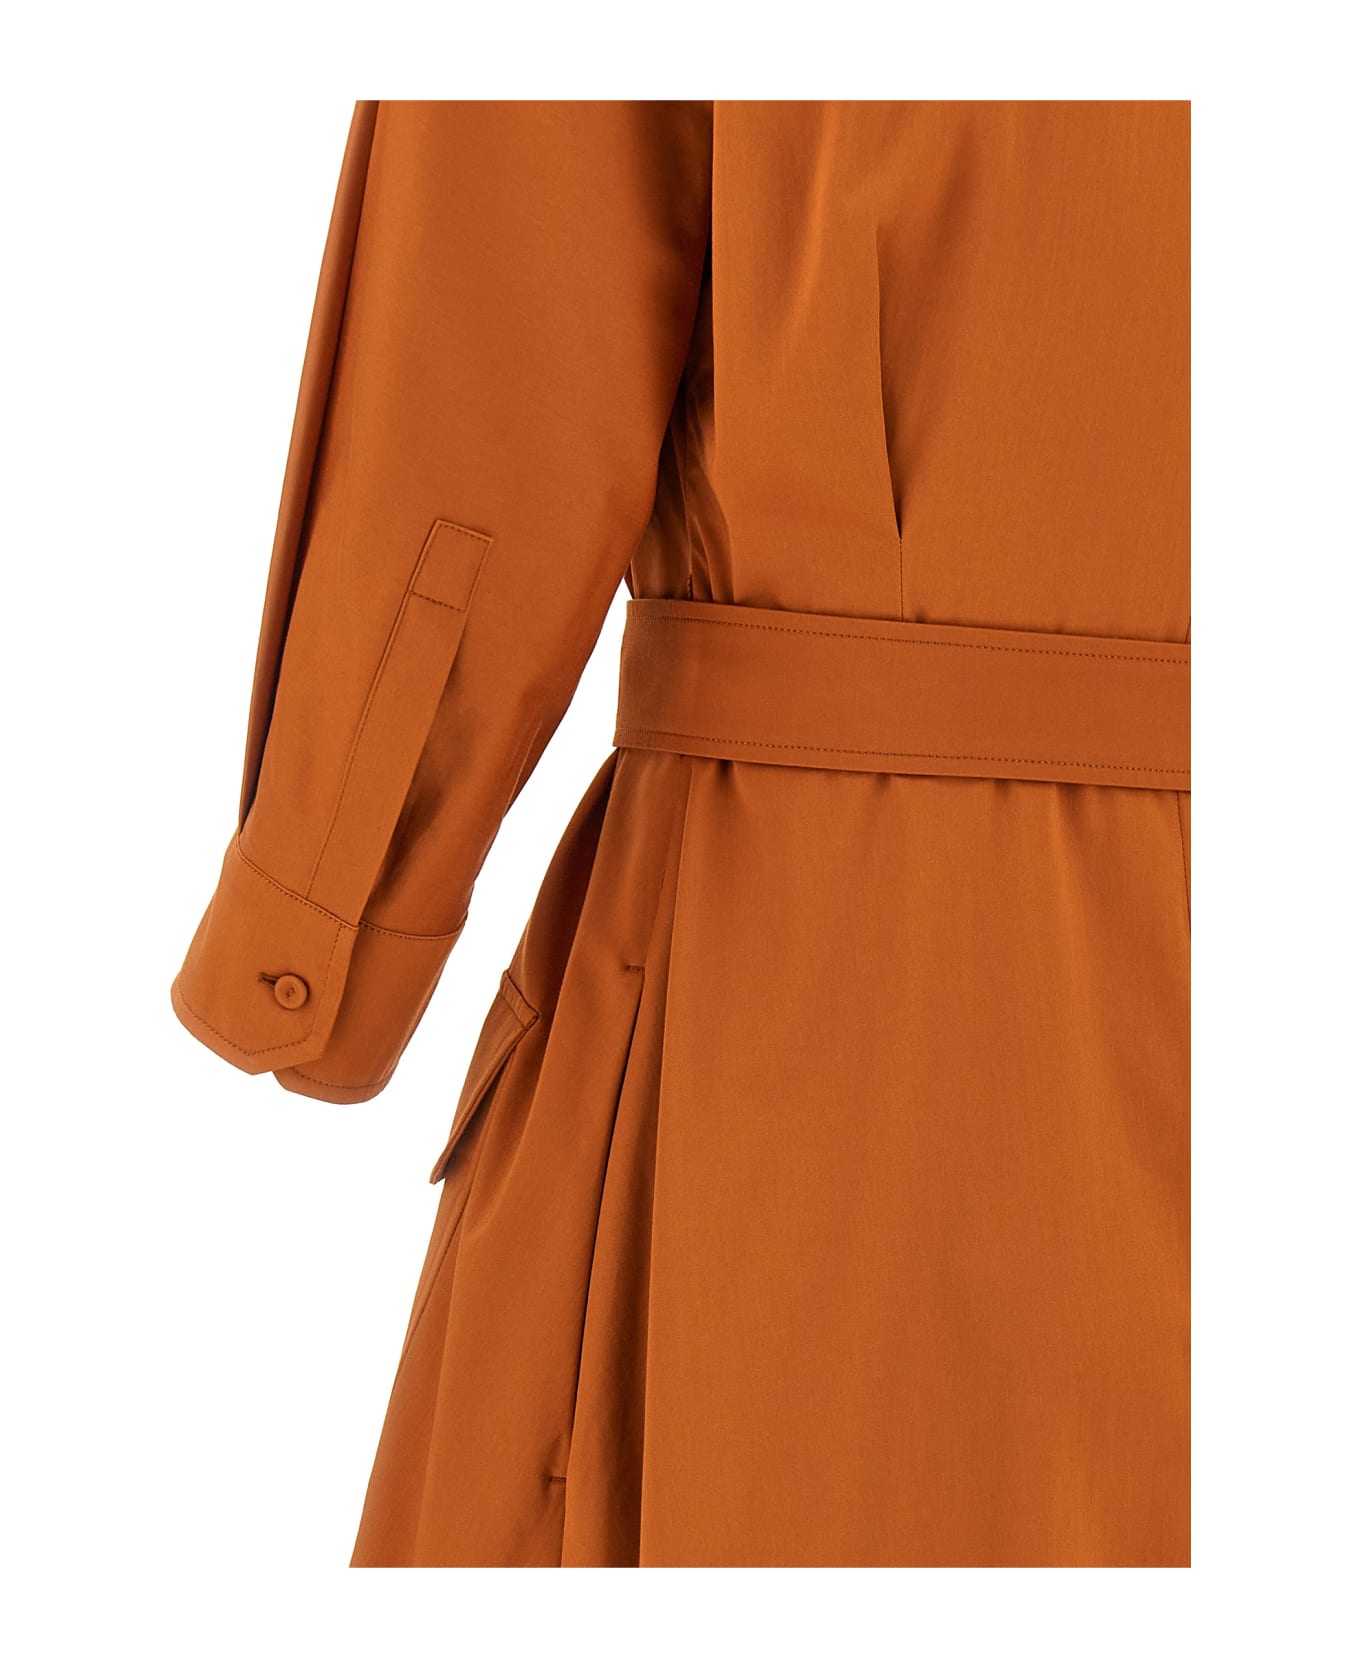 Max Mara 'sibari' Dress - Orange